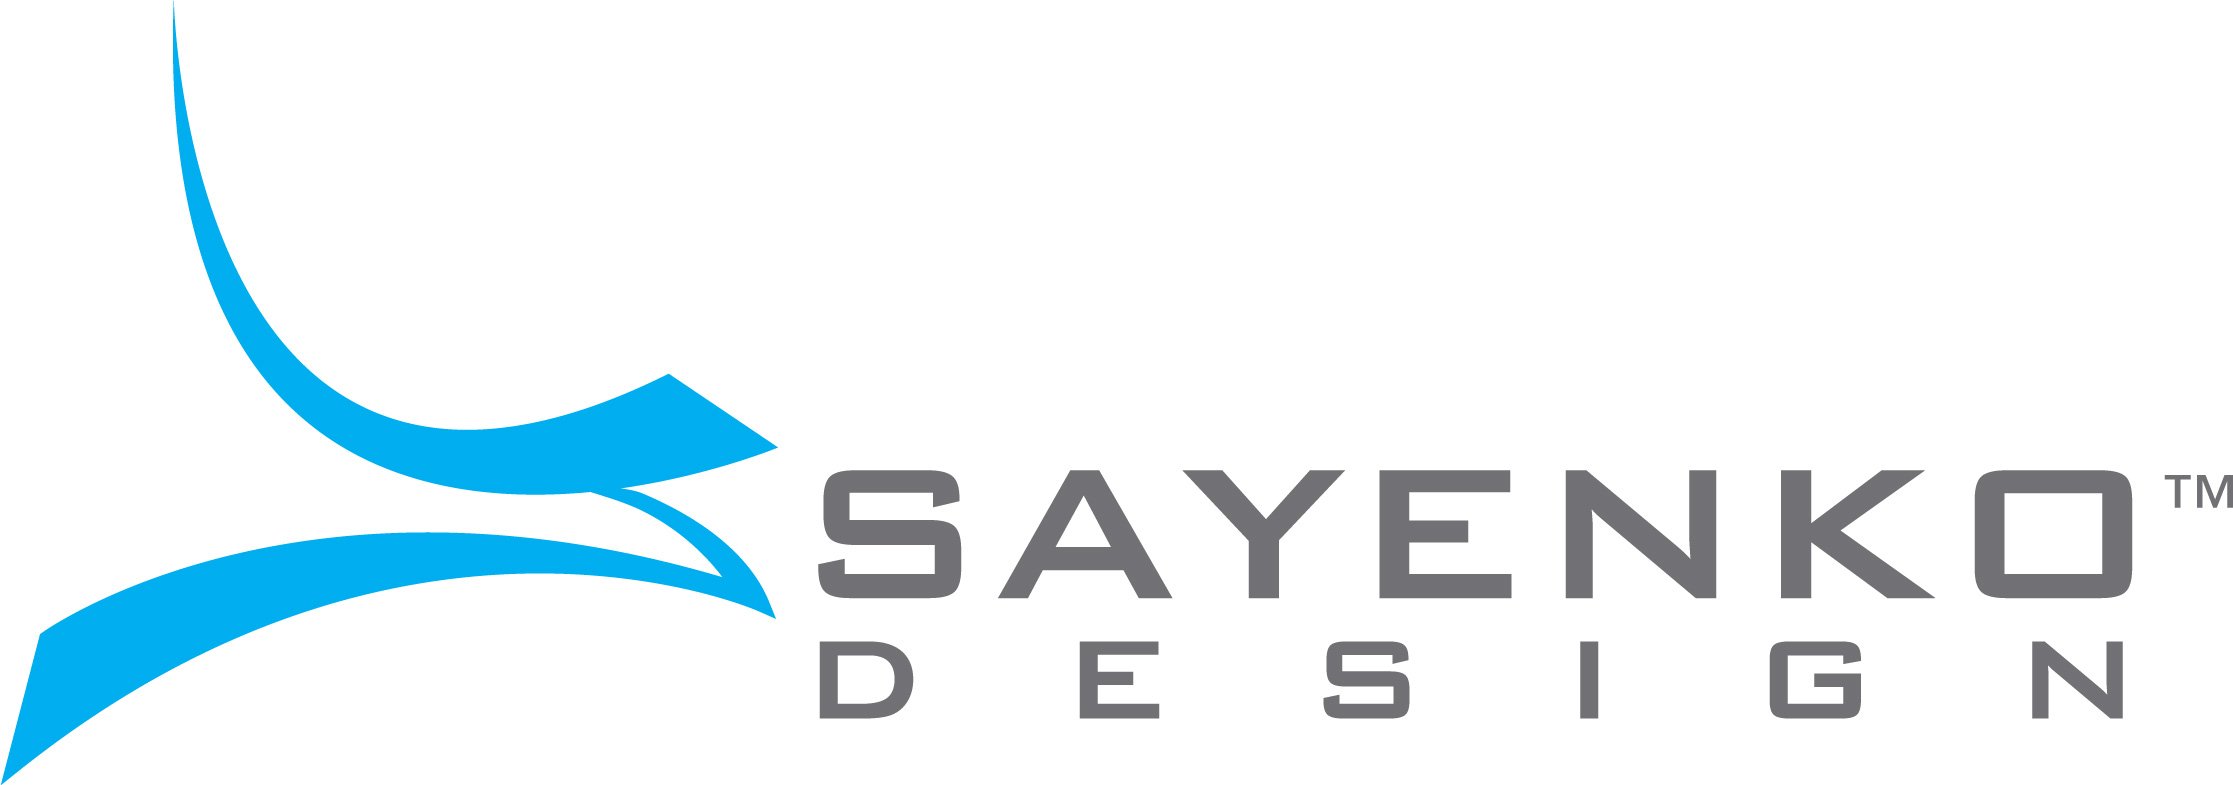 Top Website Development Firm Logo: Sayenko Design